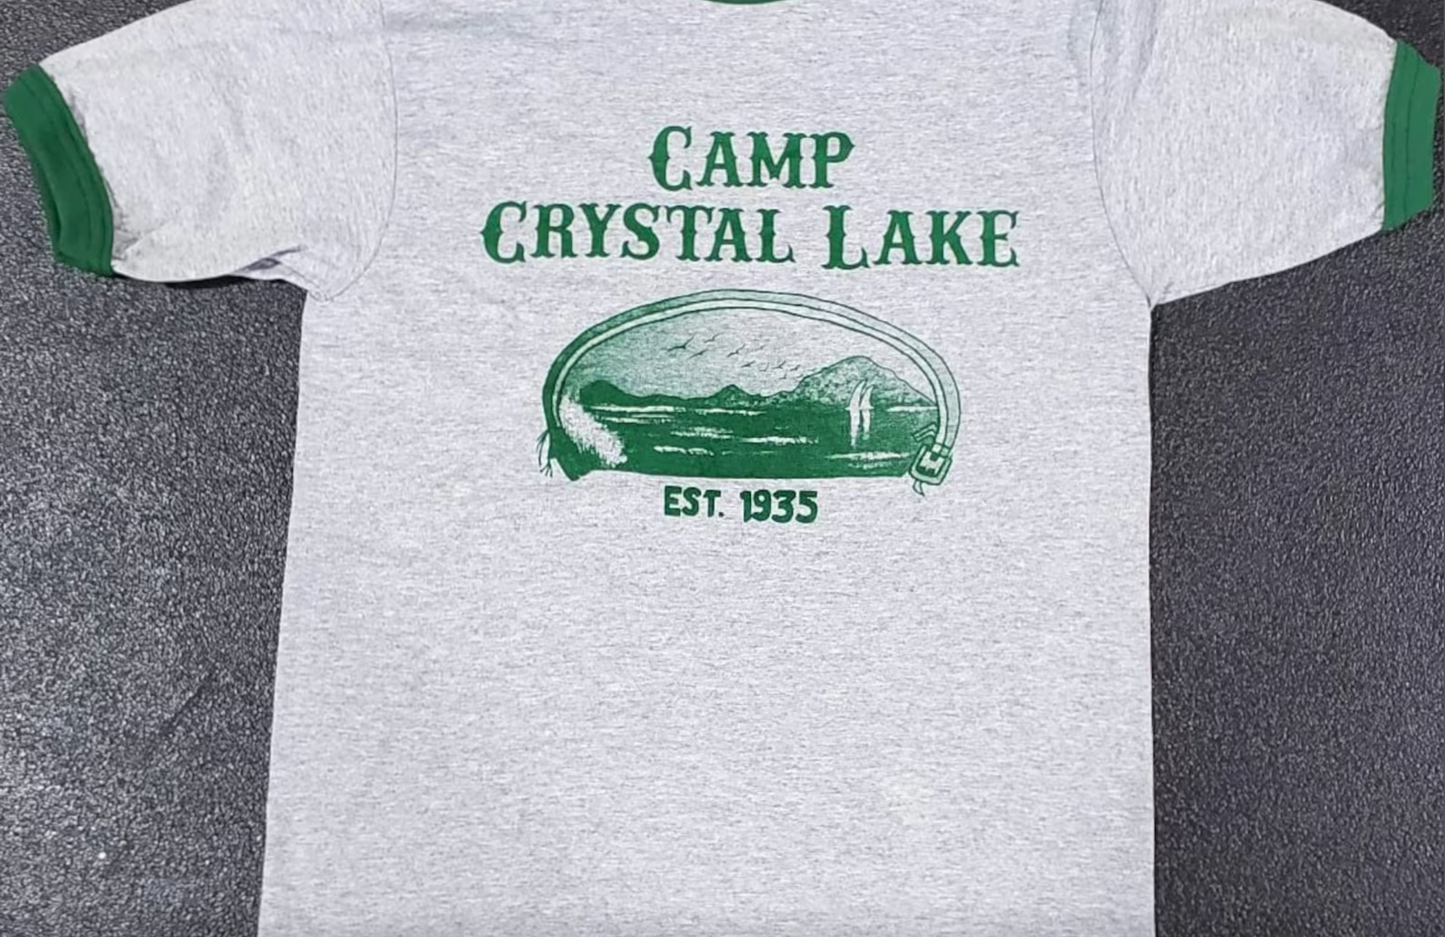 Camp Crystal Lake shirt